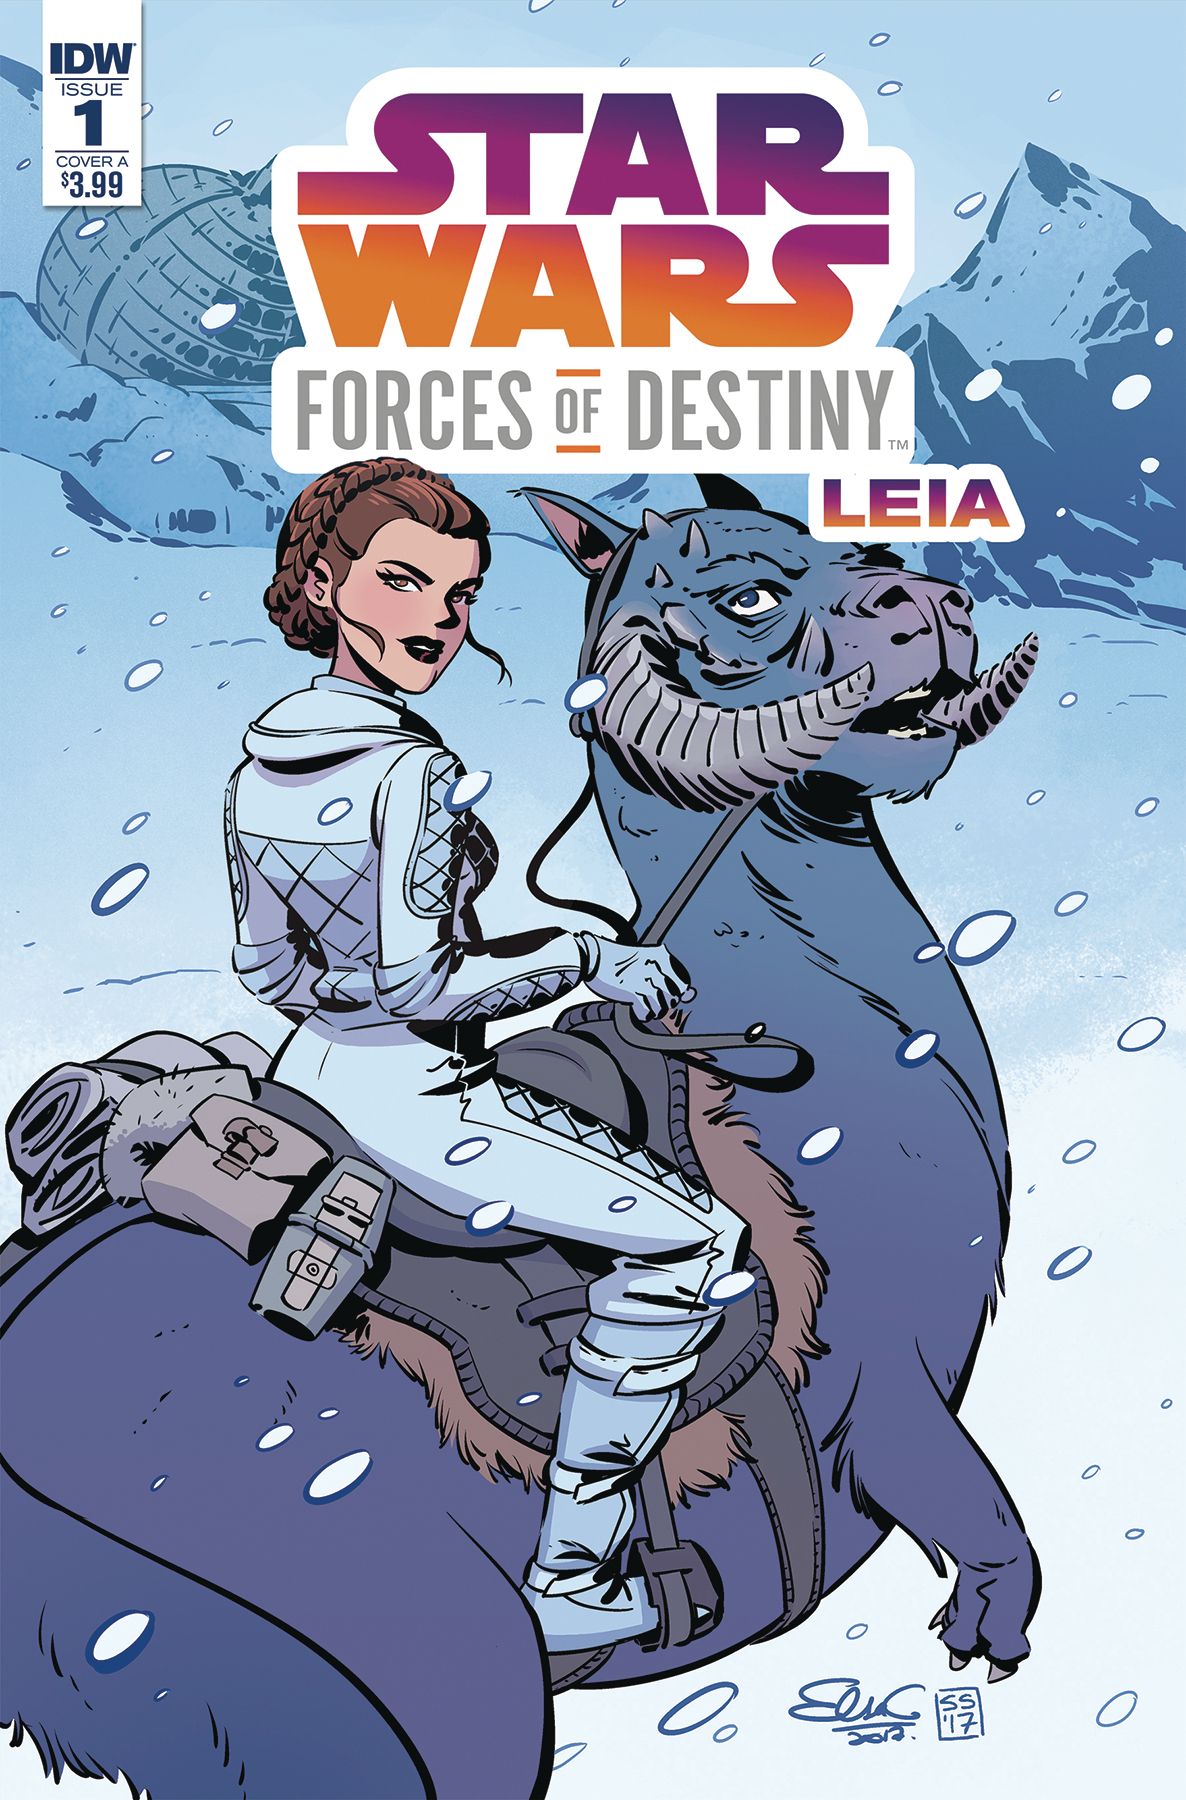 Star Wars Forces of Destiny - Leia #1 Comic